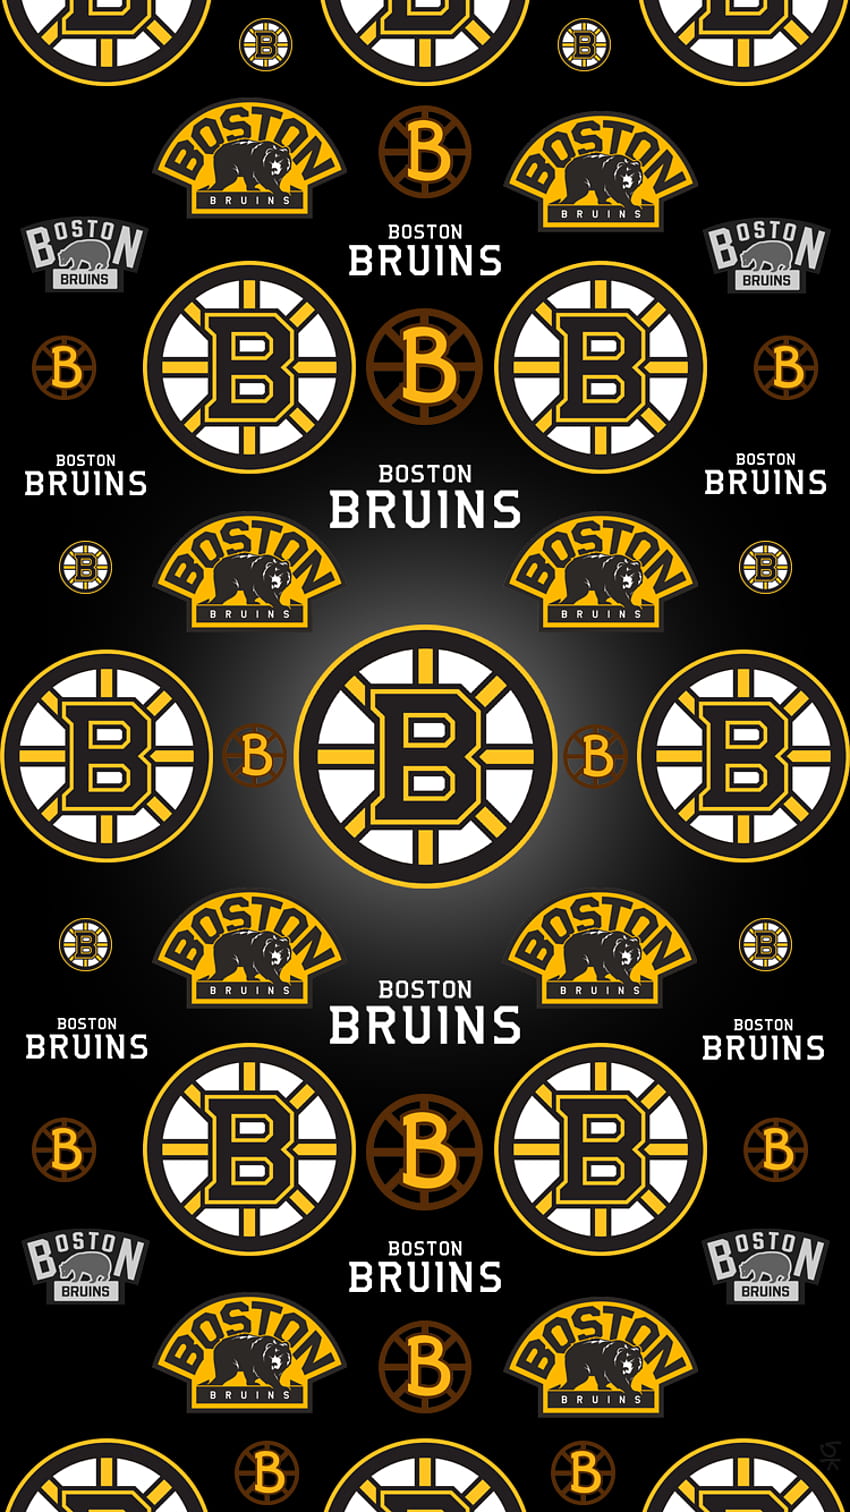 iPhone - Filo sportivo per iPhone 6. Pagina 187. Forum MacRumors. Bruins di Boston, bruins di Boston, hockey di Boston, telefono di Boston Bruins Sfondo del telefono HD